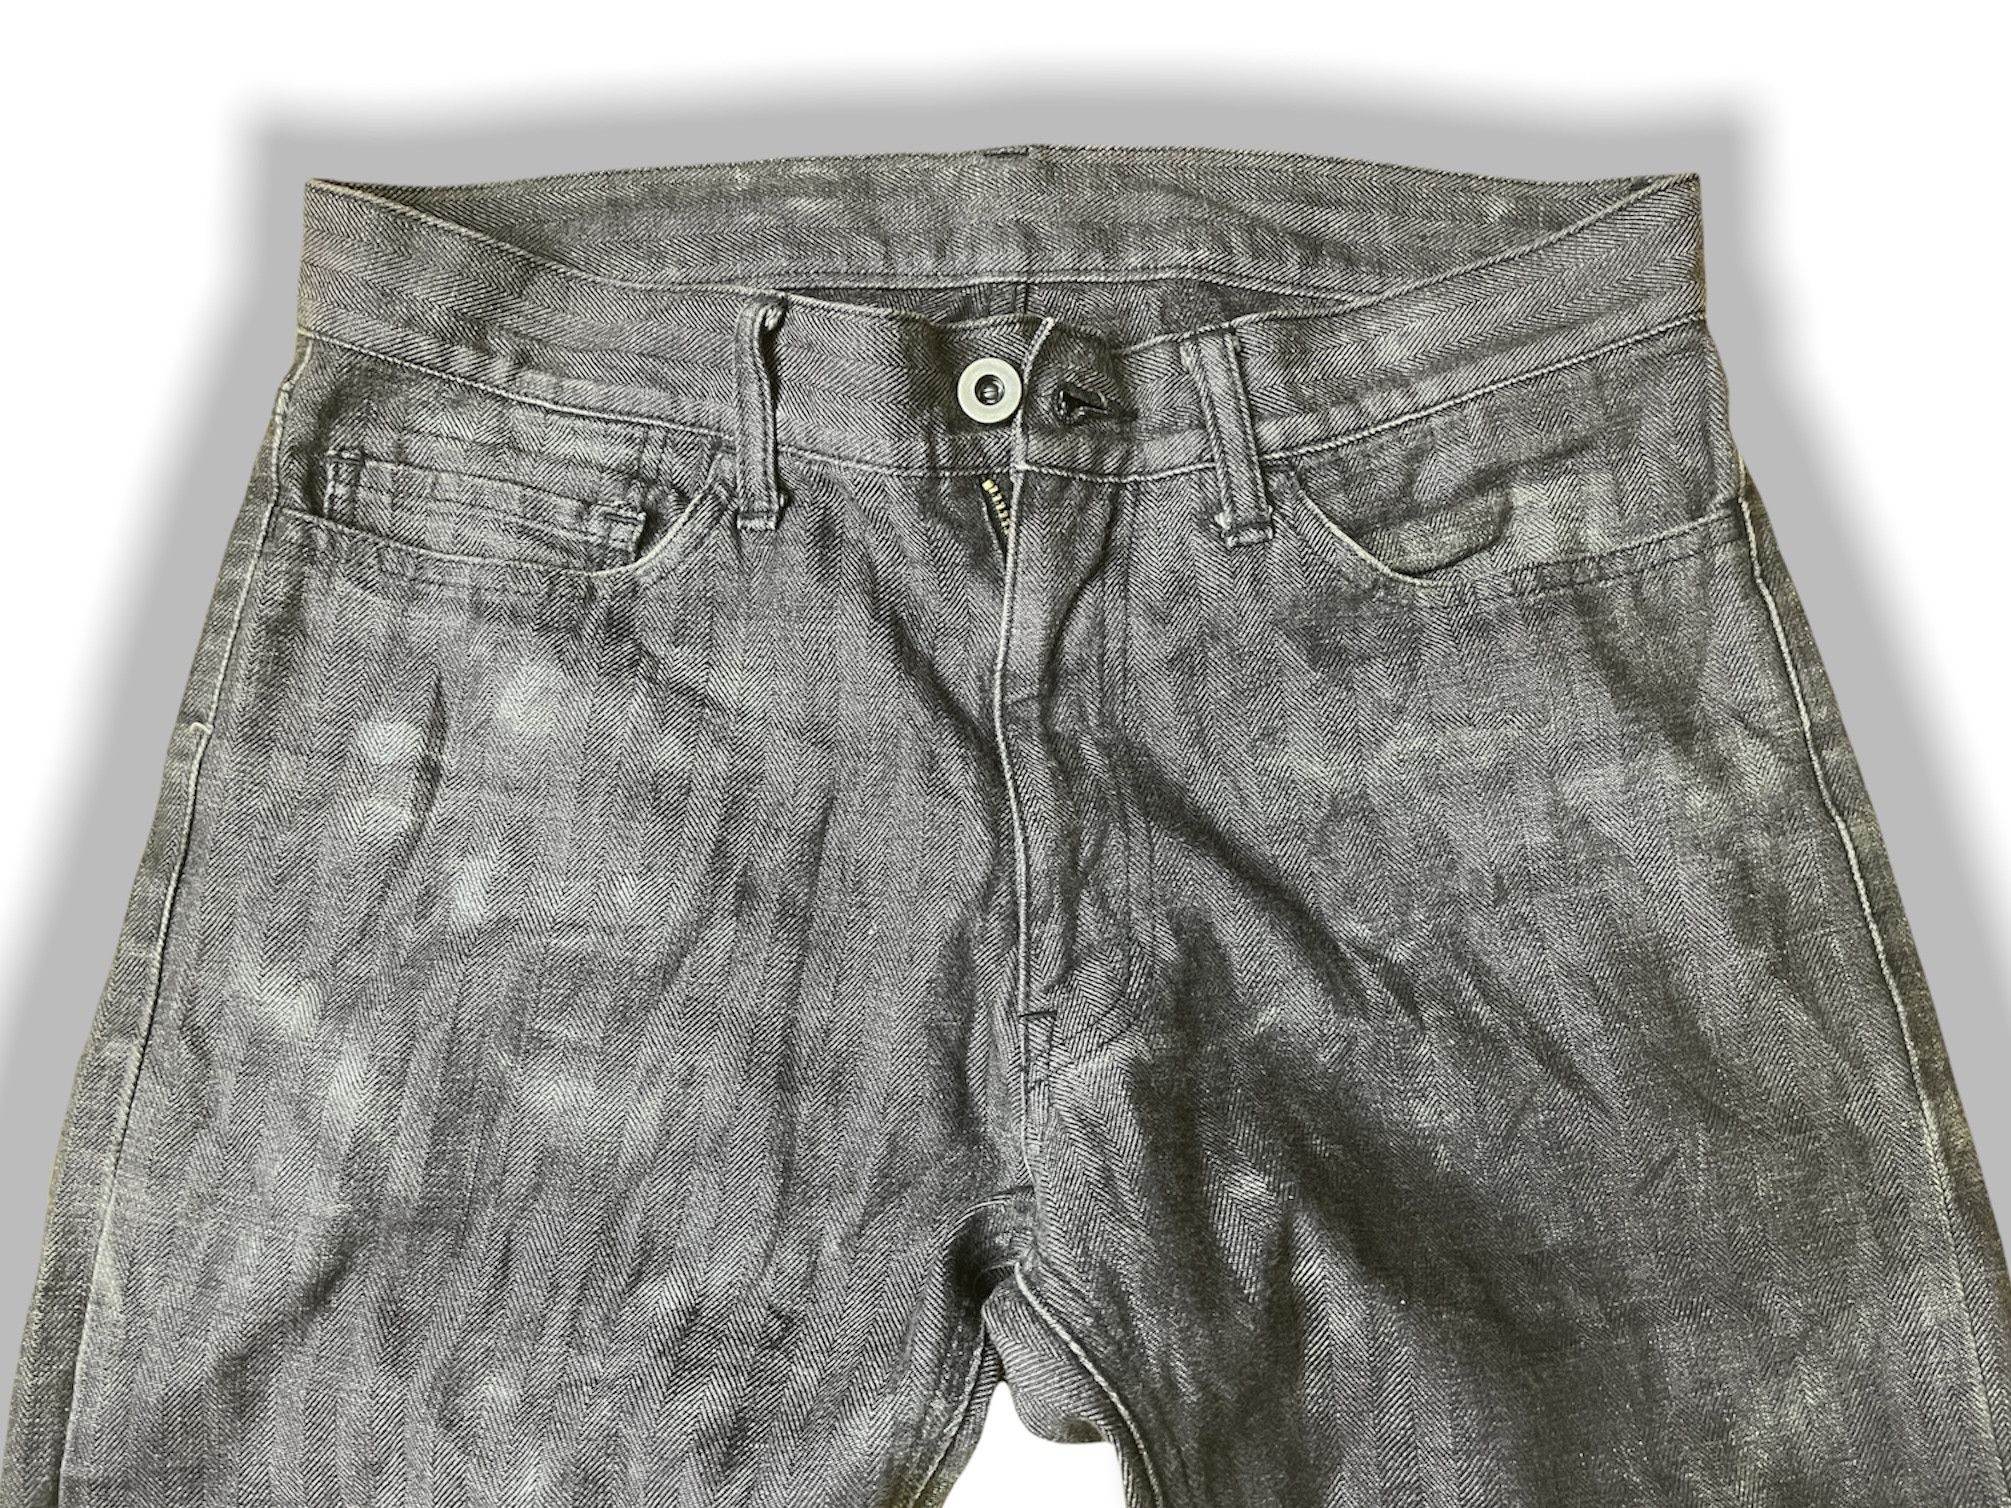 Japanese Brand - Distressed EDGE RUPERT Flare Denim Jeans HISTERIC STYLE - 6